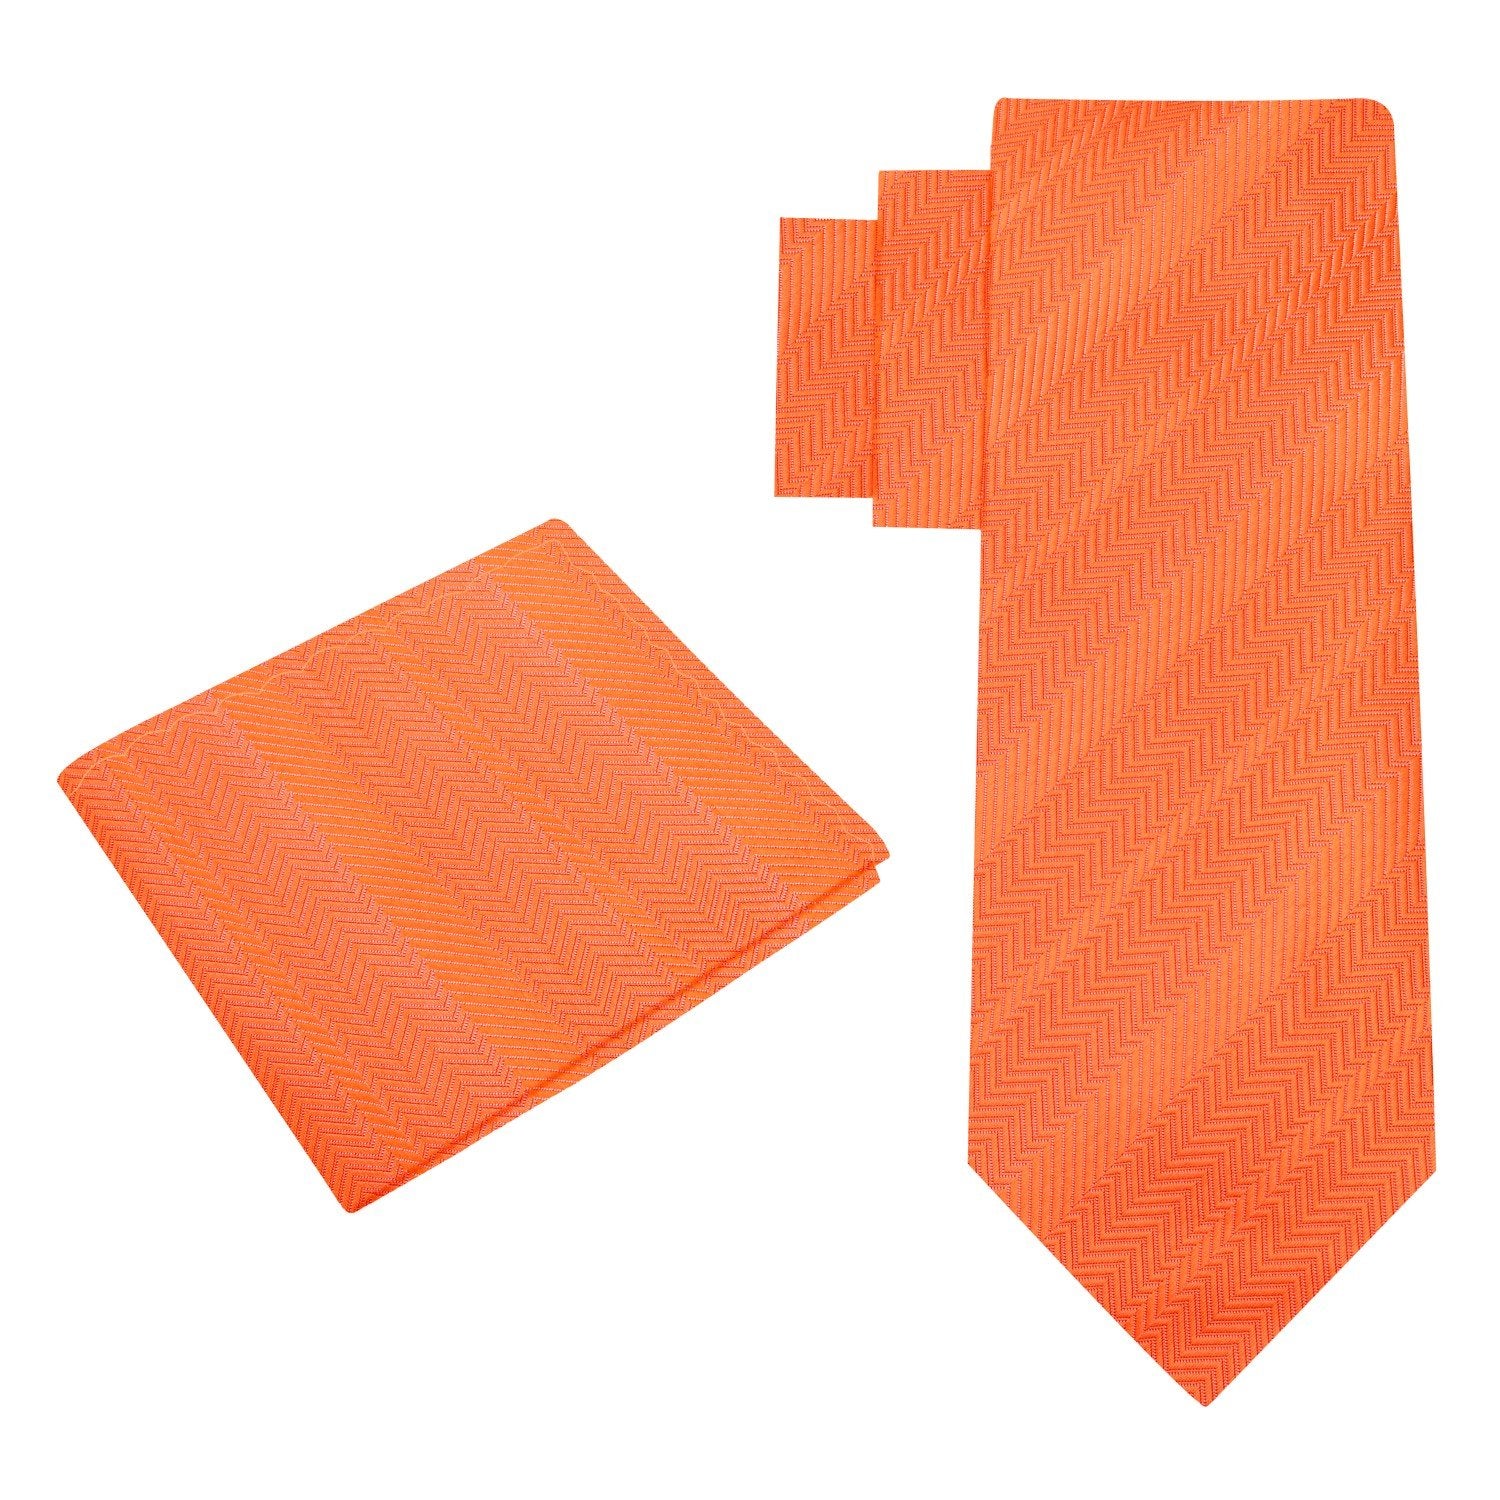 Alt View: solid orange tie and pocket square